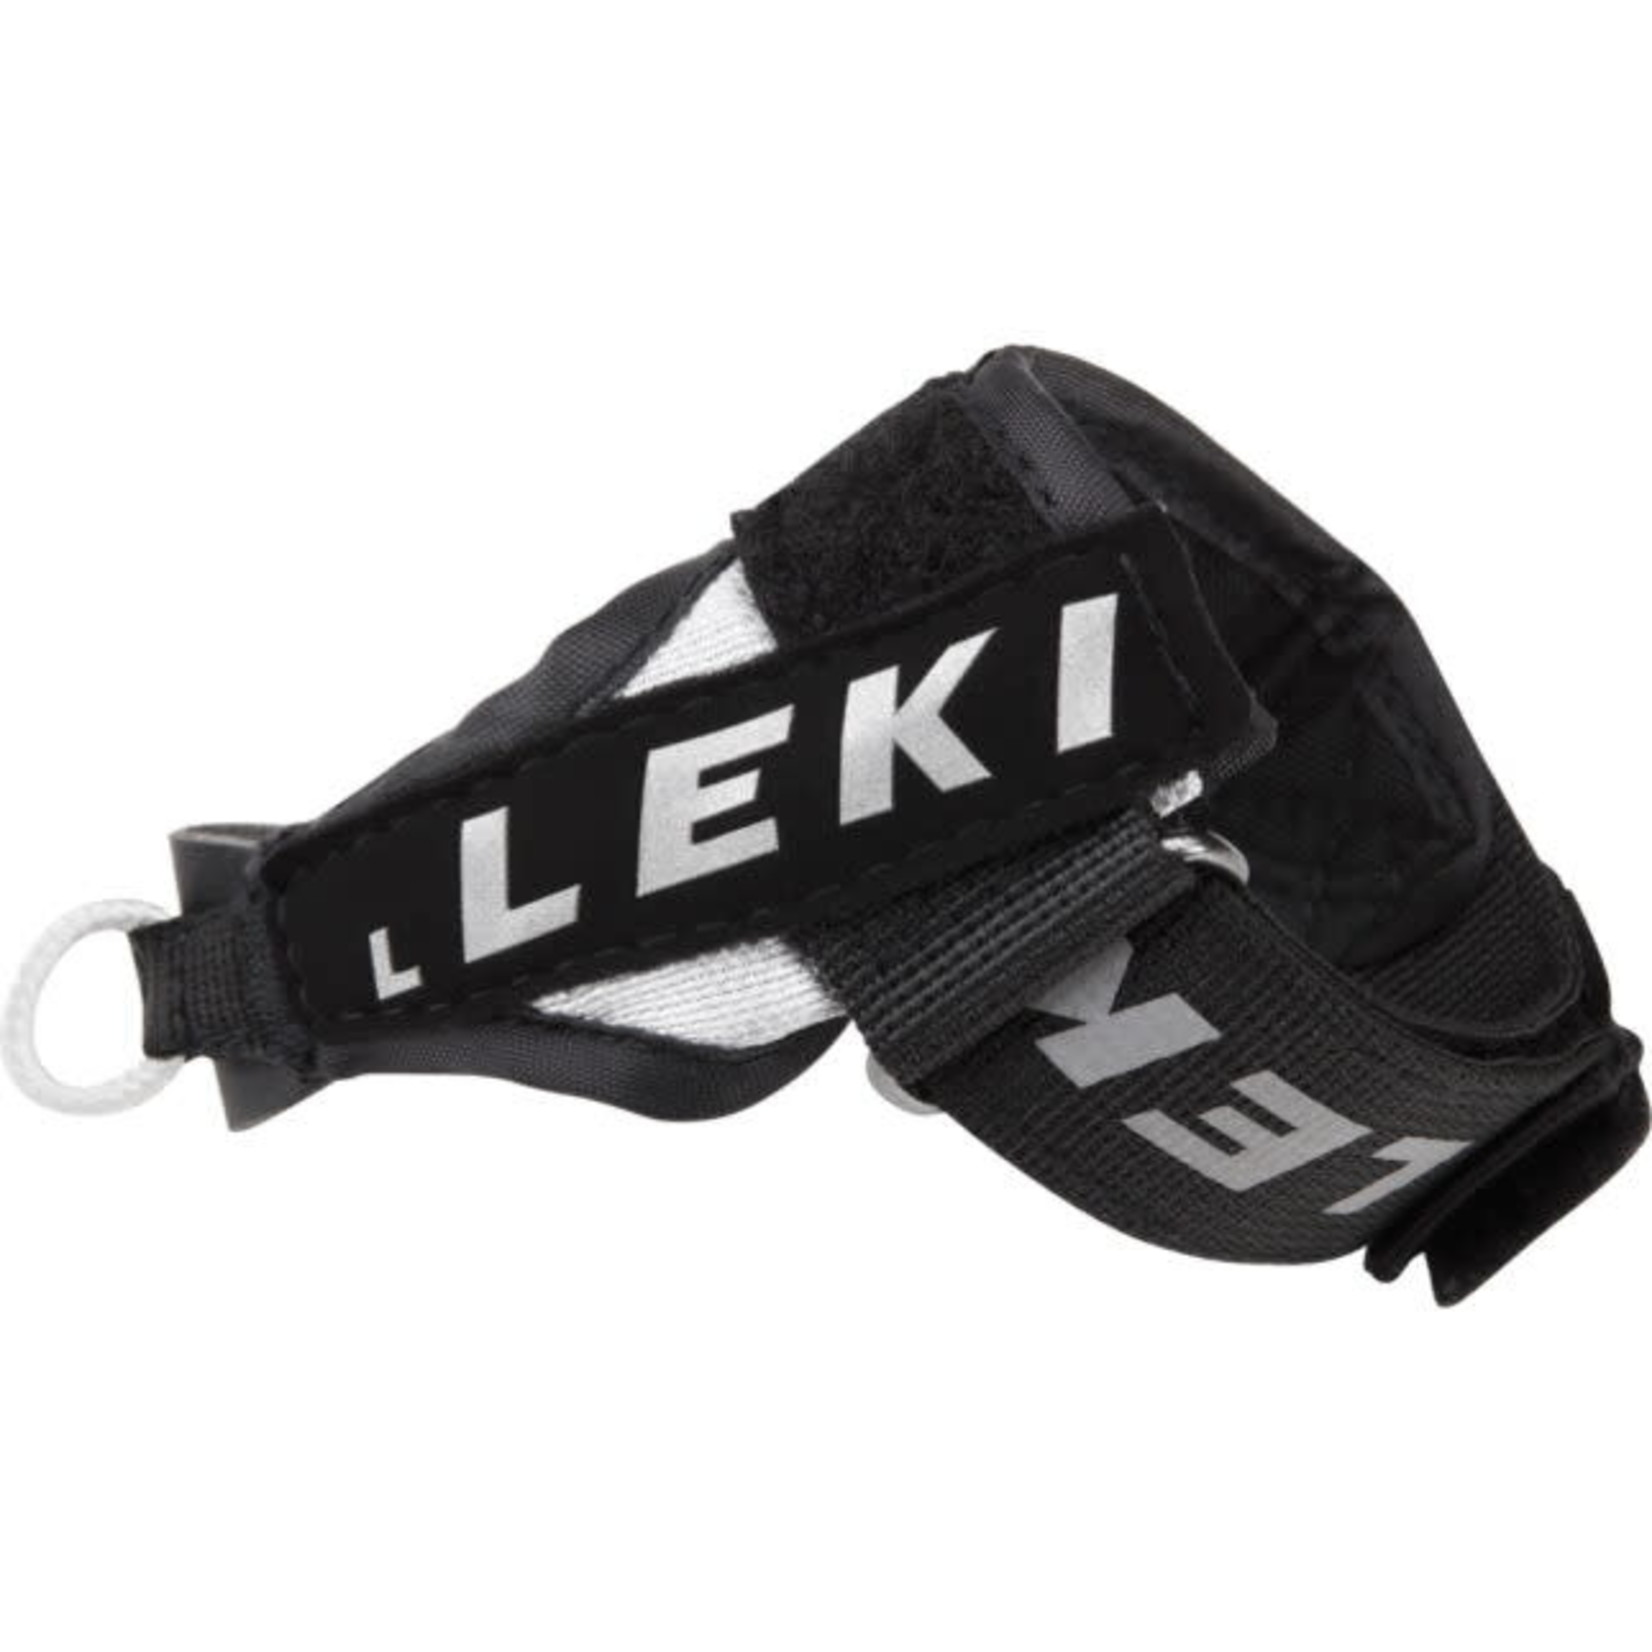 Leki LEKI, Trigger 3 Shark Strap, M/L/XL, Black/Silver